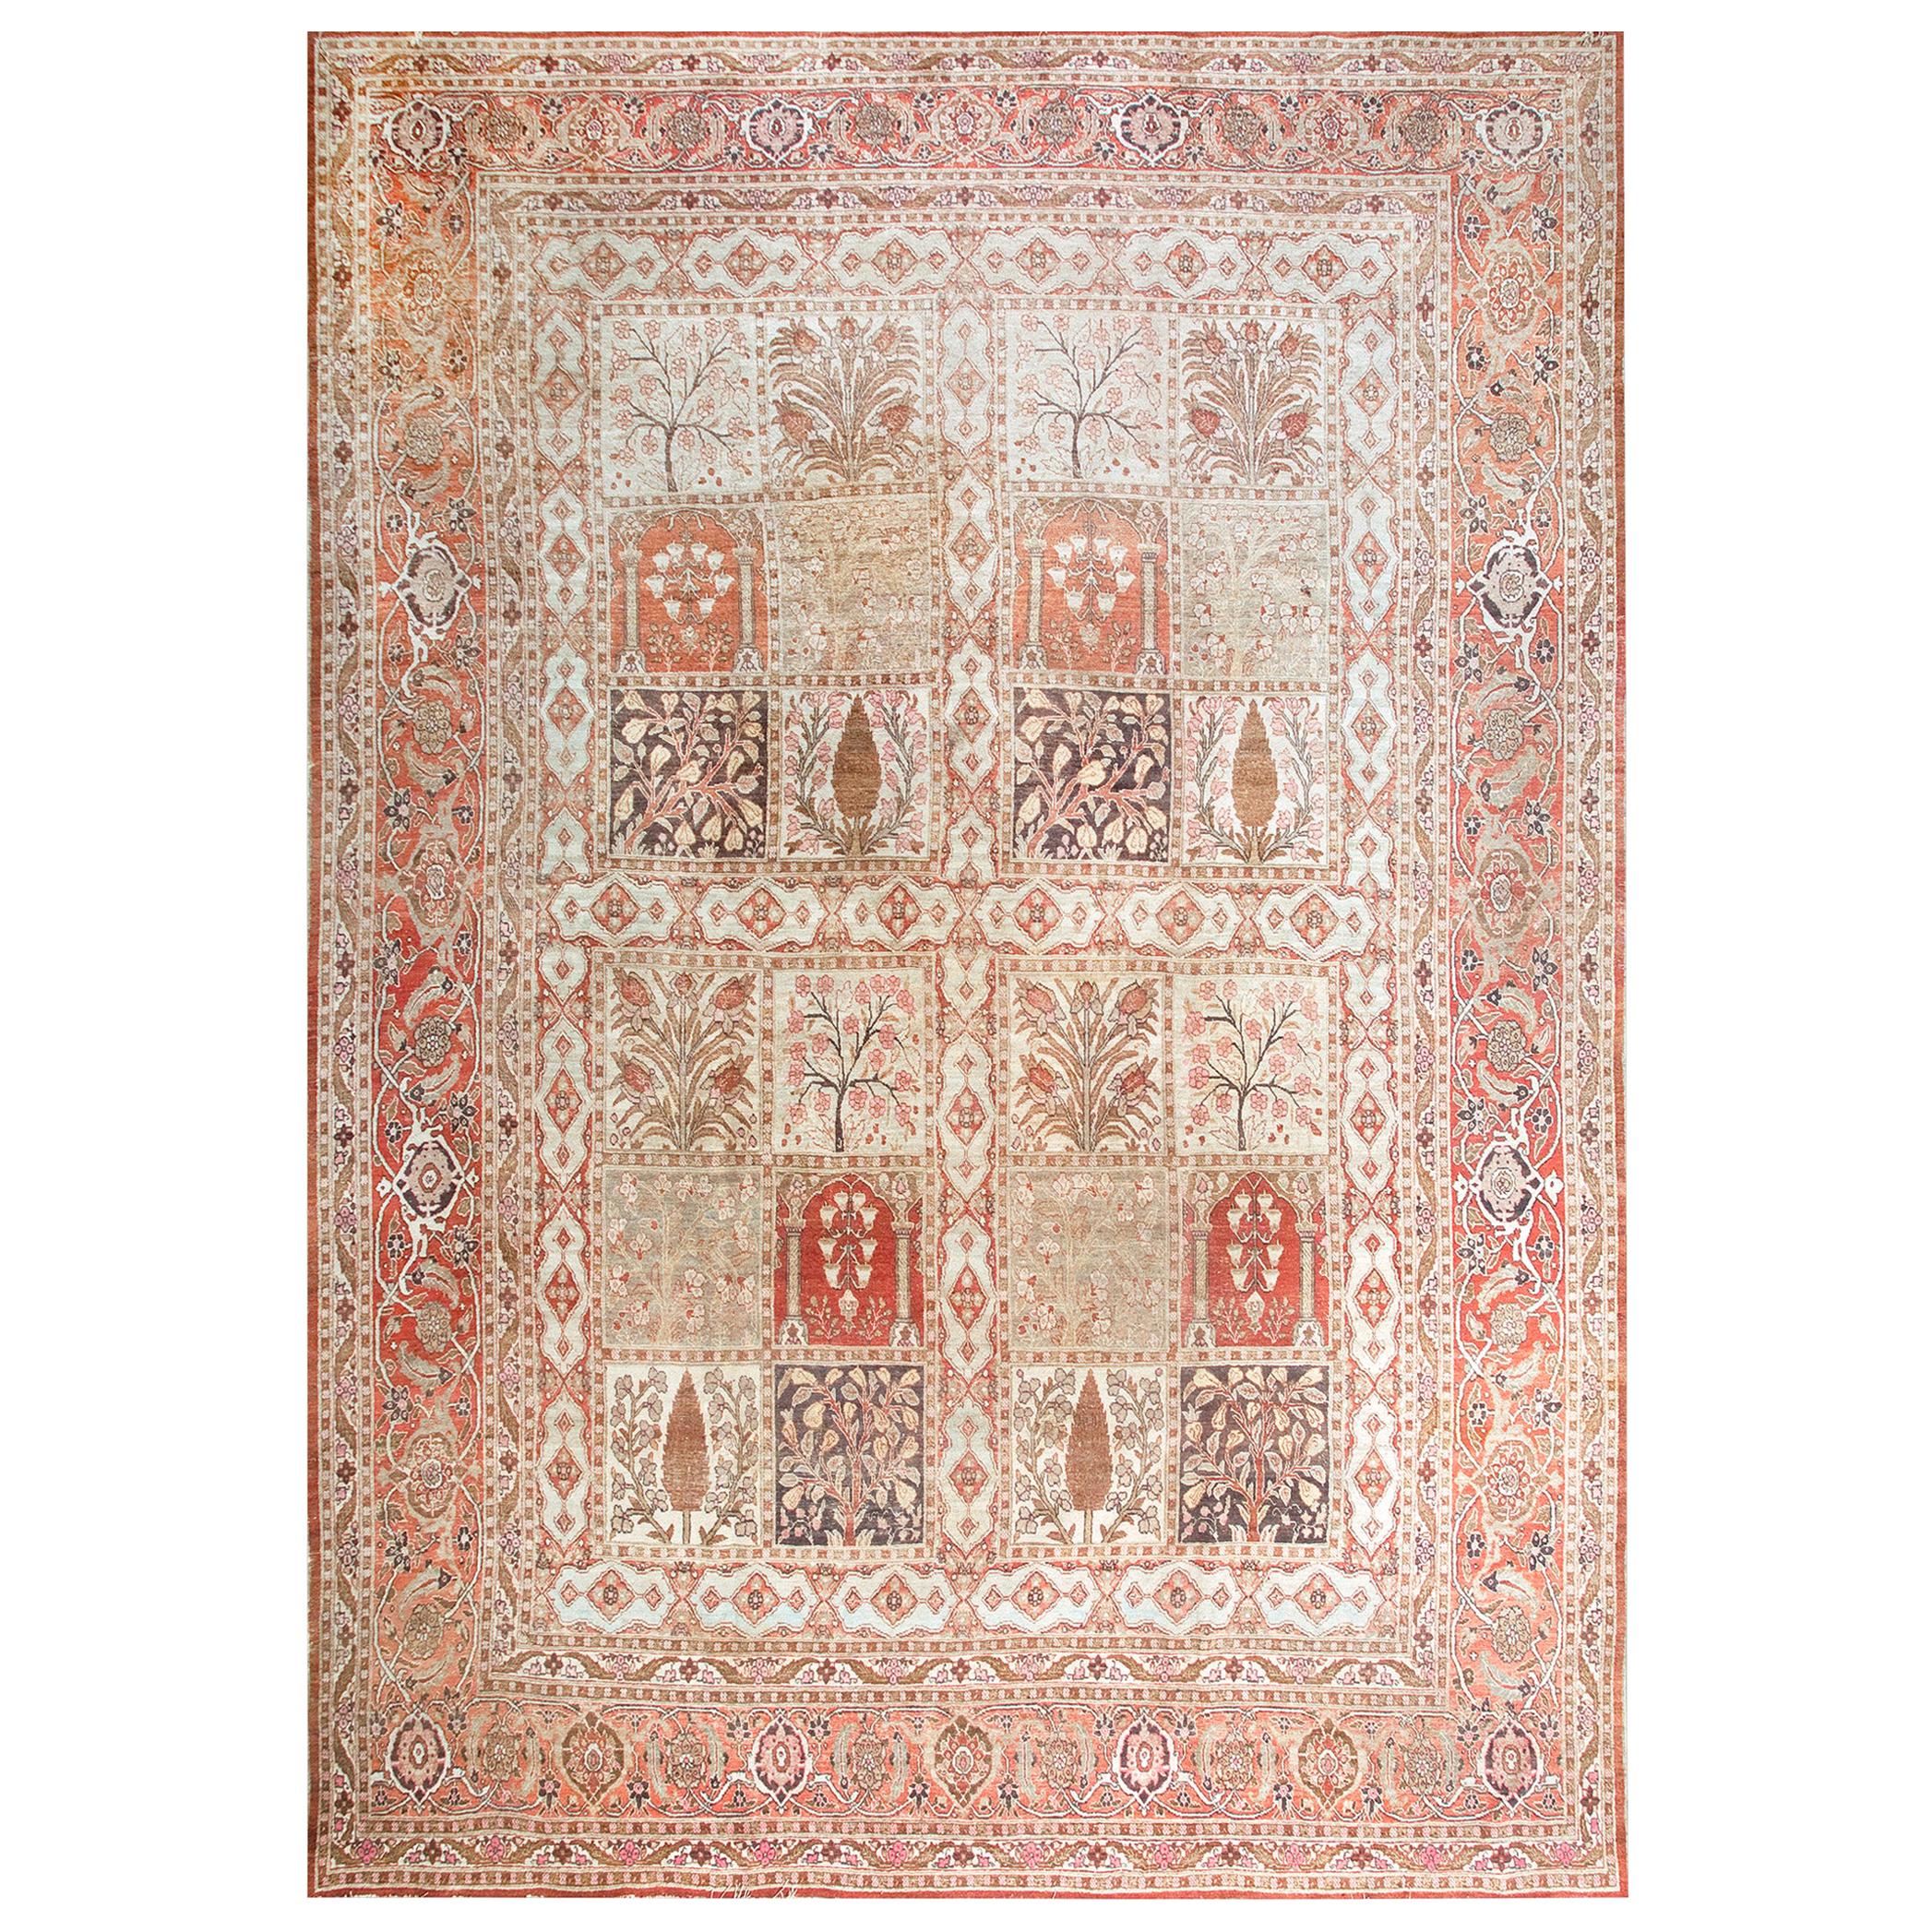 Early 20th Century Persian Tabriz Garden Carpet ( 11' x 15'10" - 335 x 483 ) For Sale